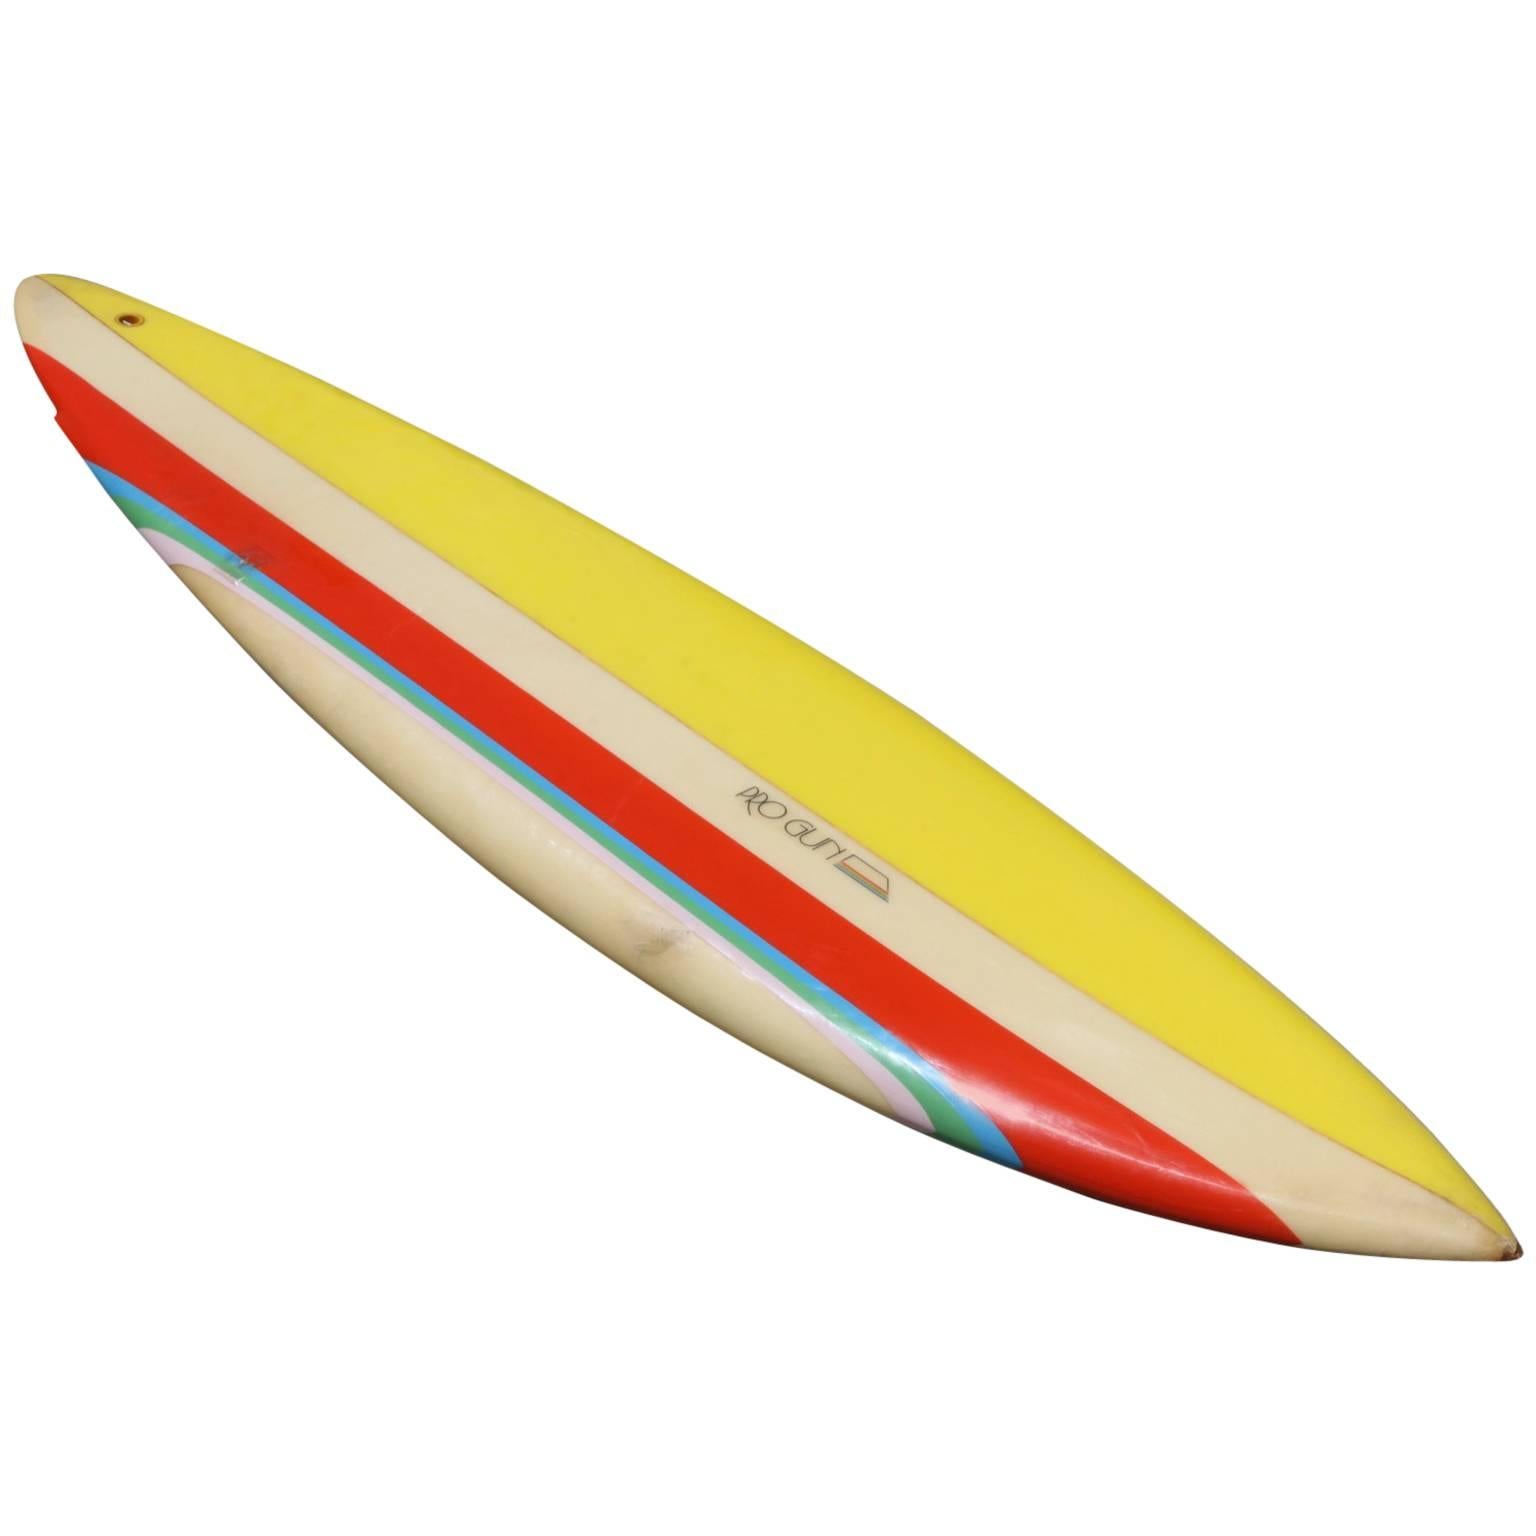 Natural Progression Topanga Canyon Surfboard circa 1975, All Original For Sale